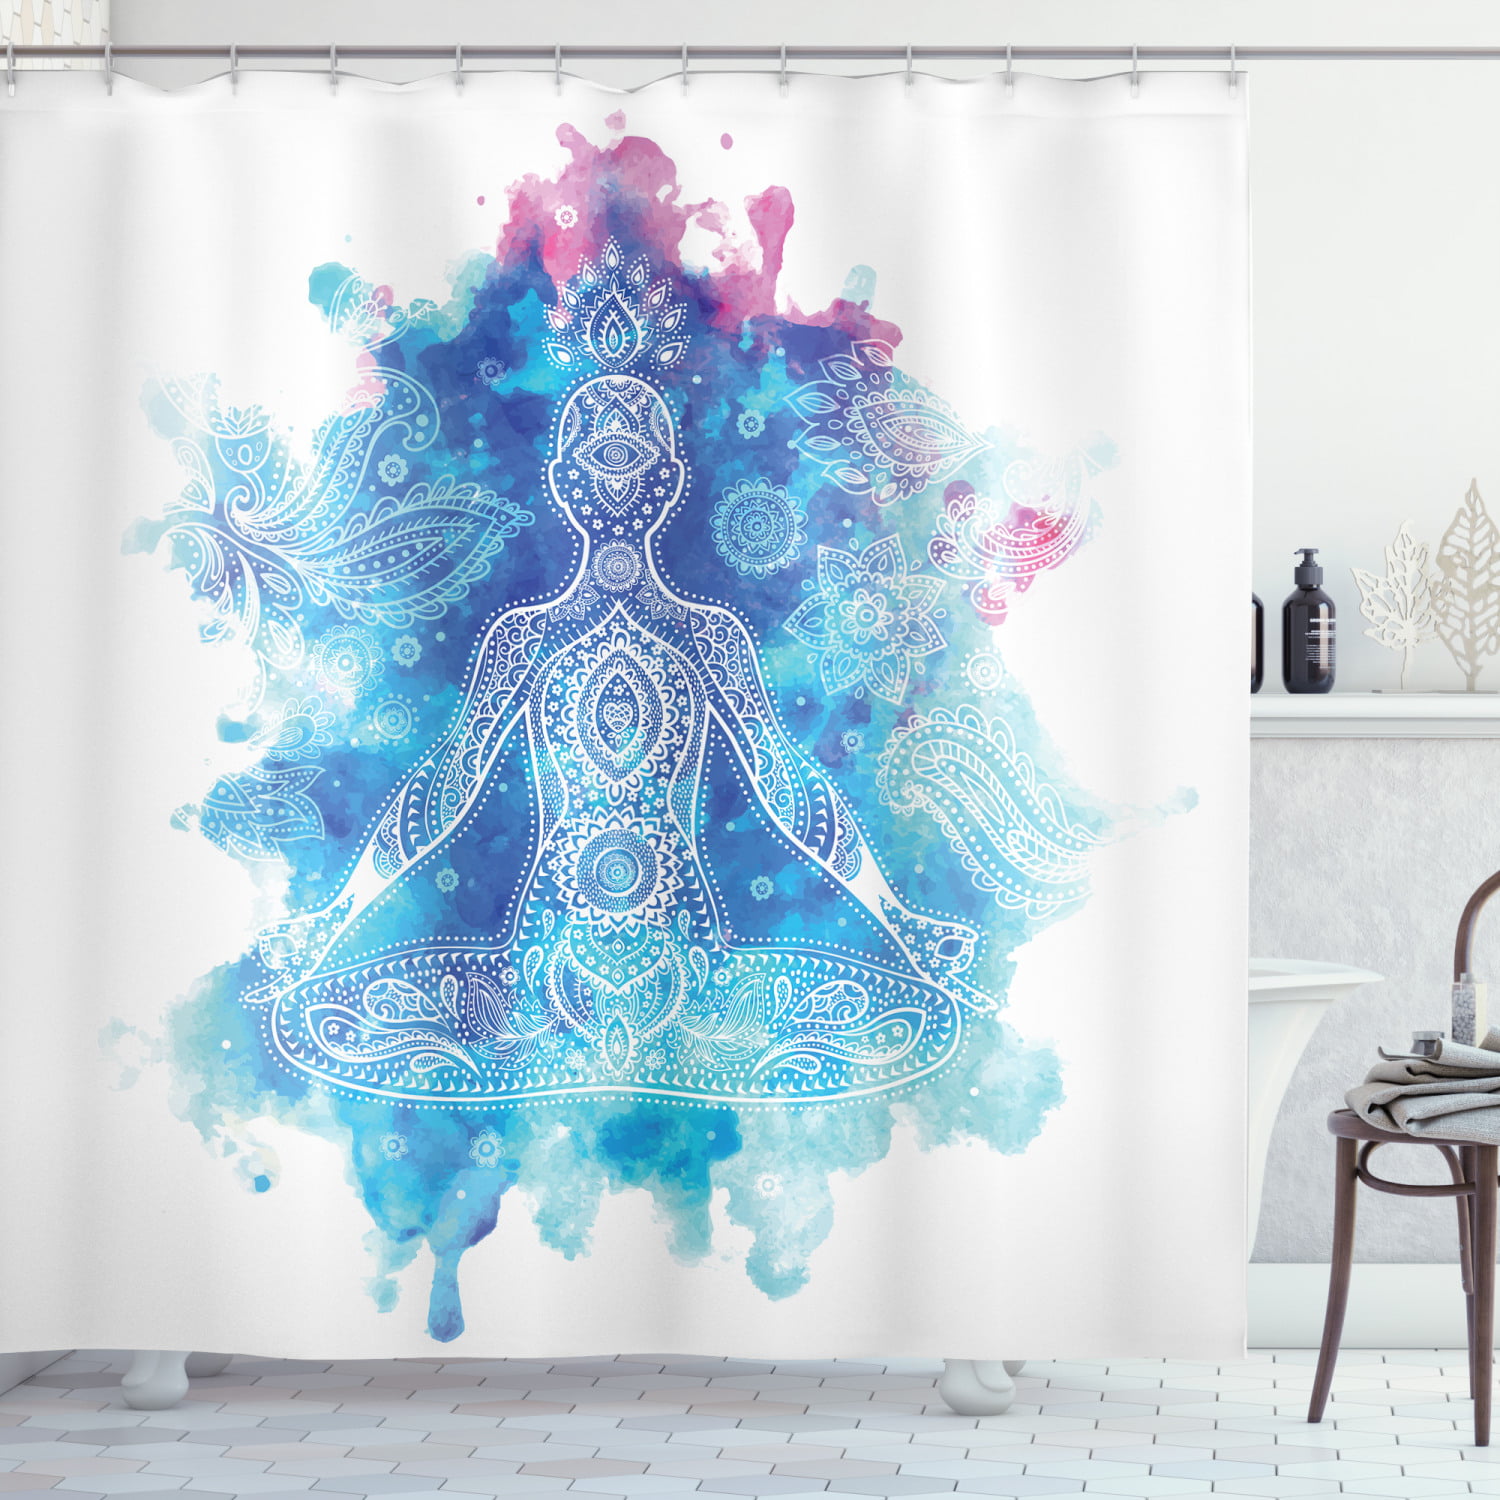 Sunset Colorful Chakras Shower Curtain Hooks Bathroom Waterproof Fabric 72X72" 